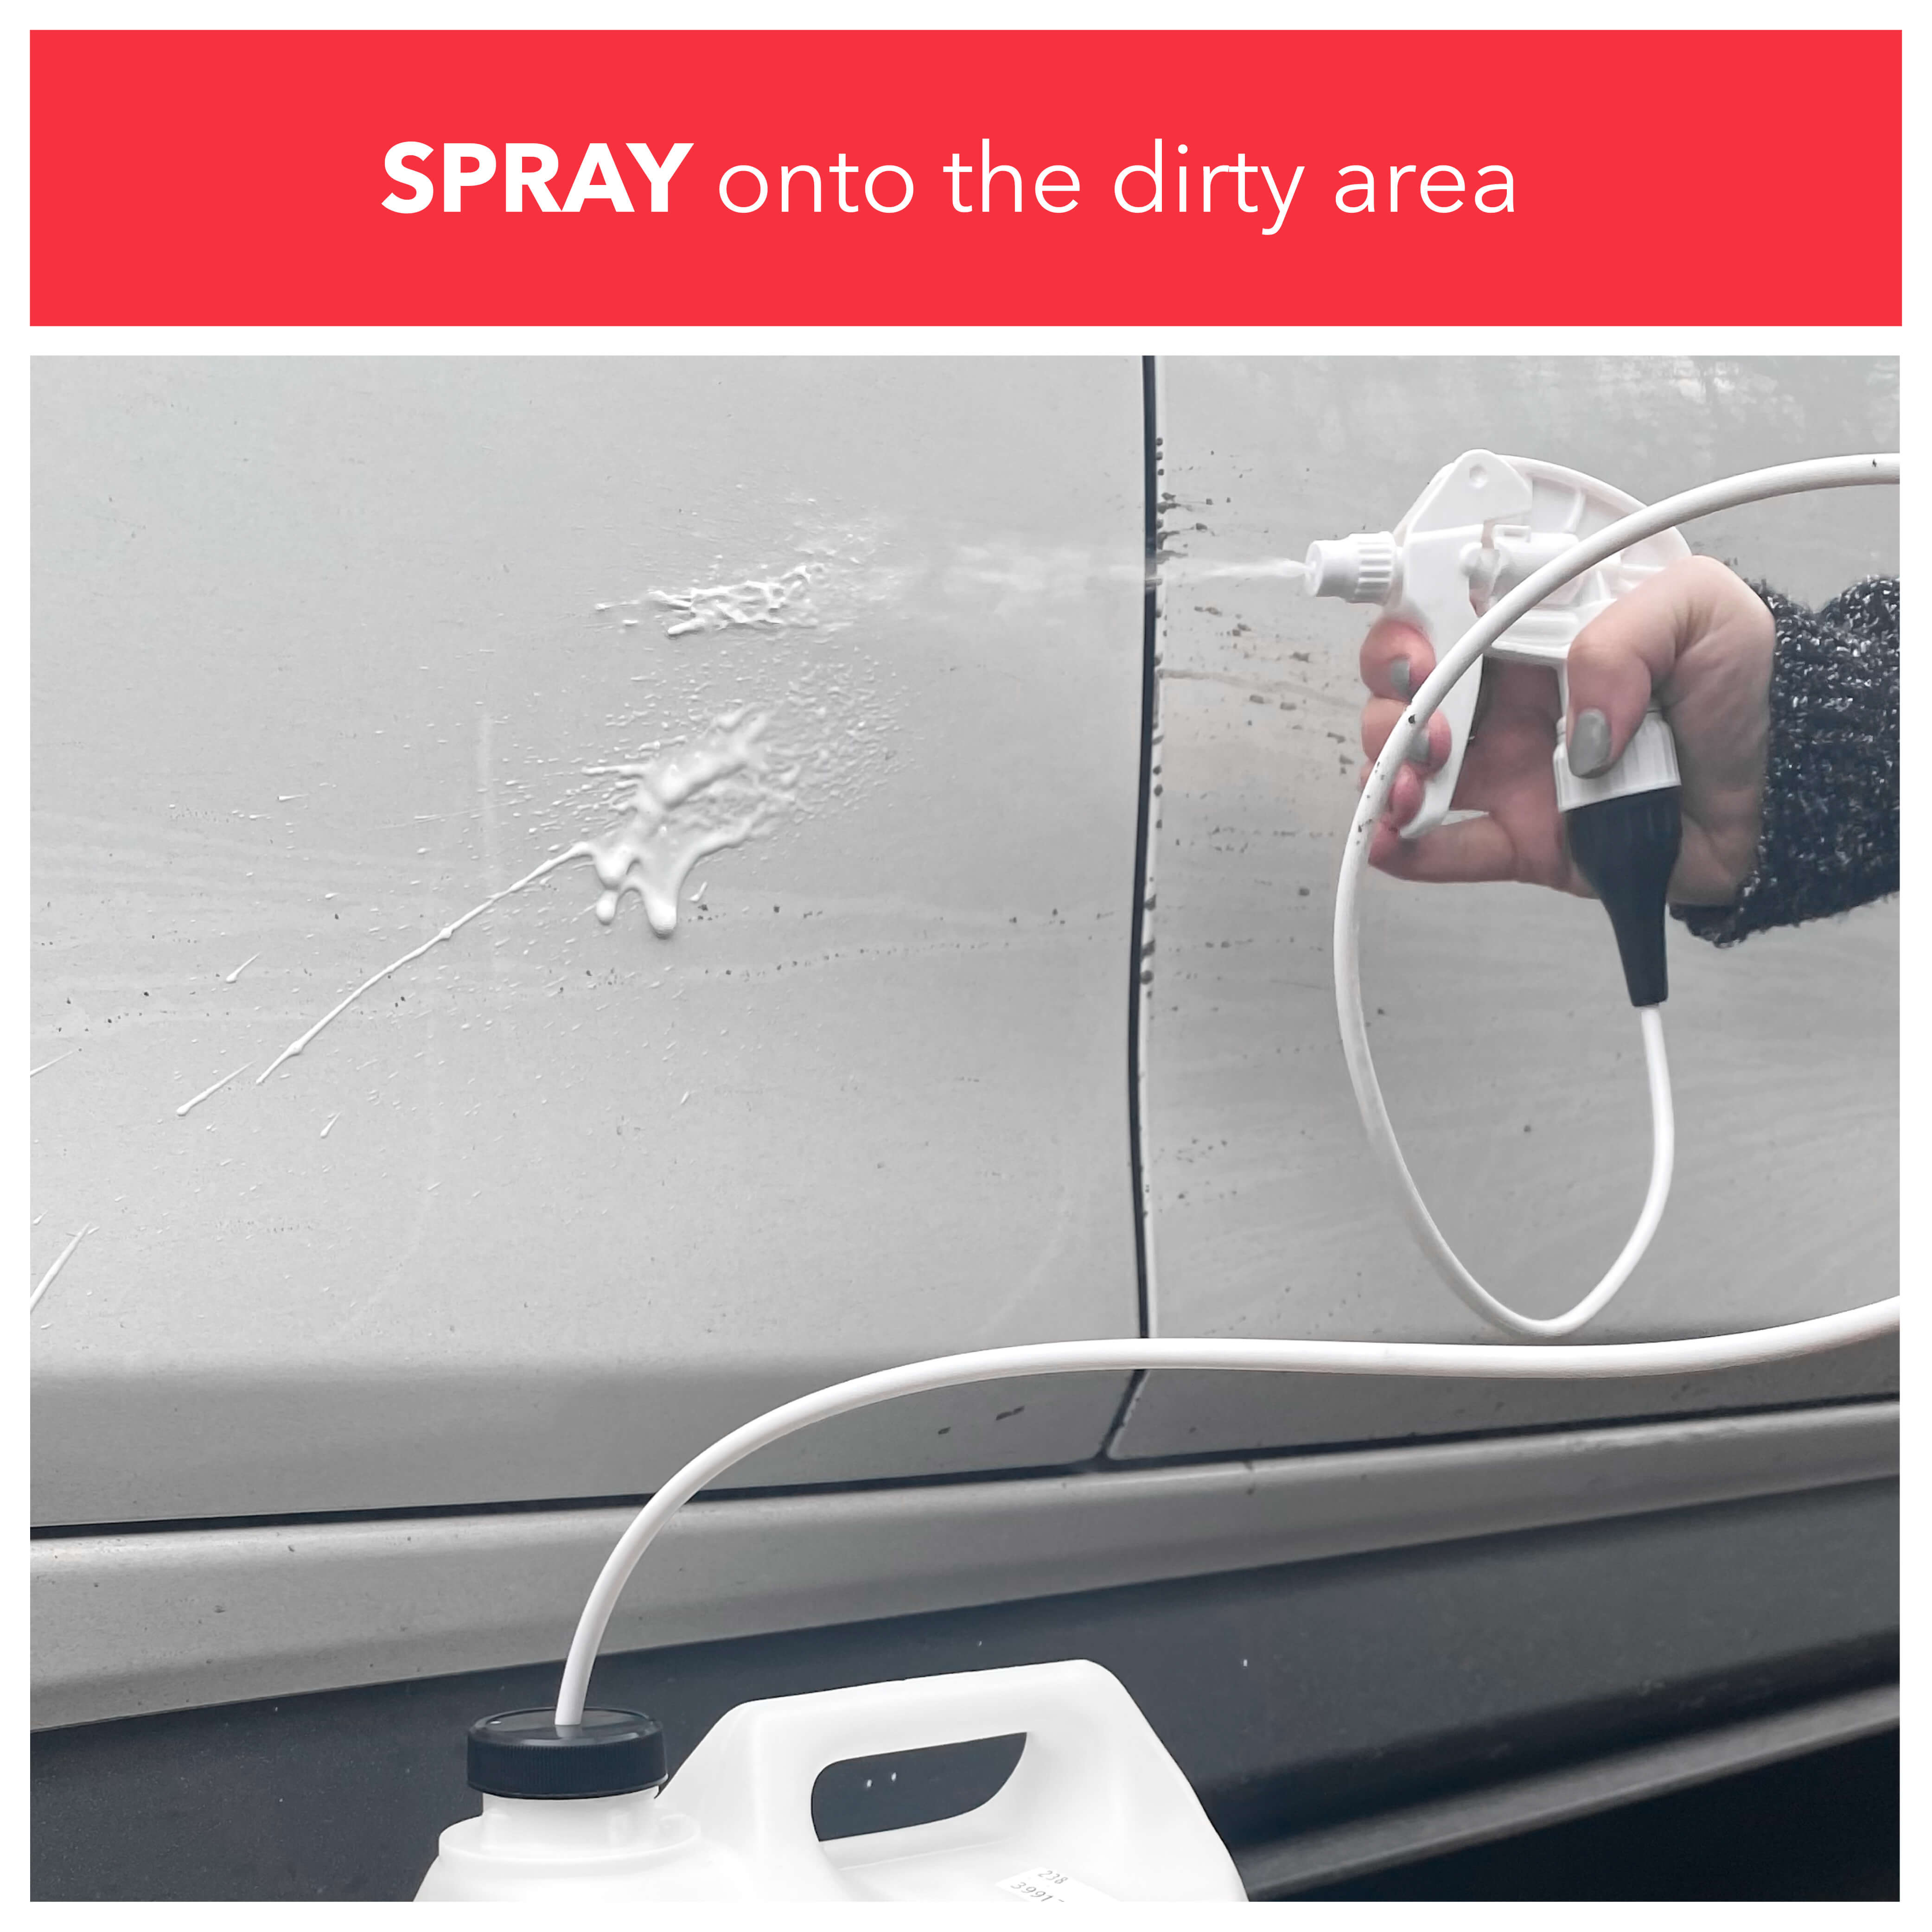 Spray onto the dirty area